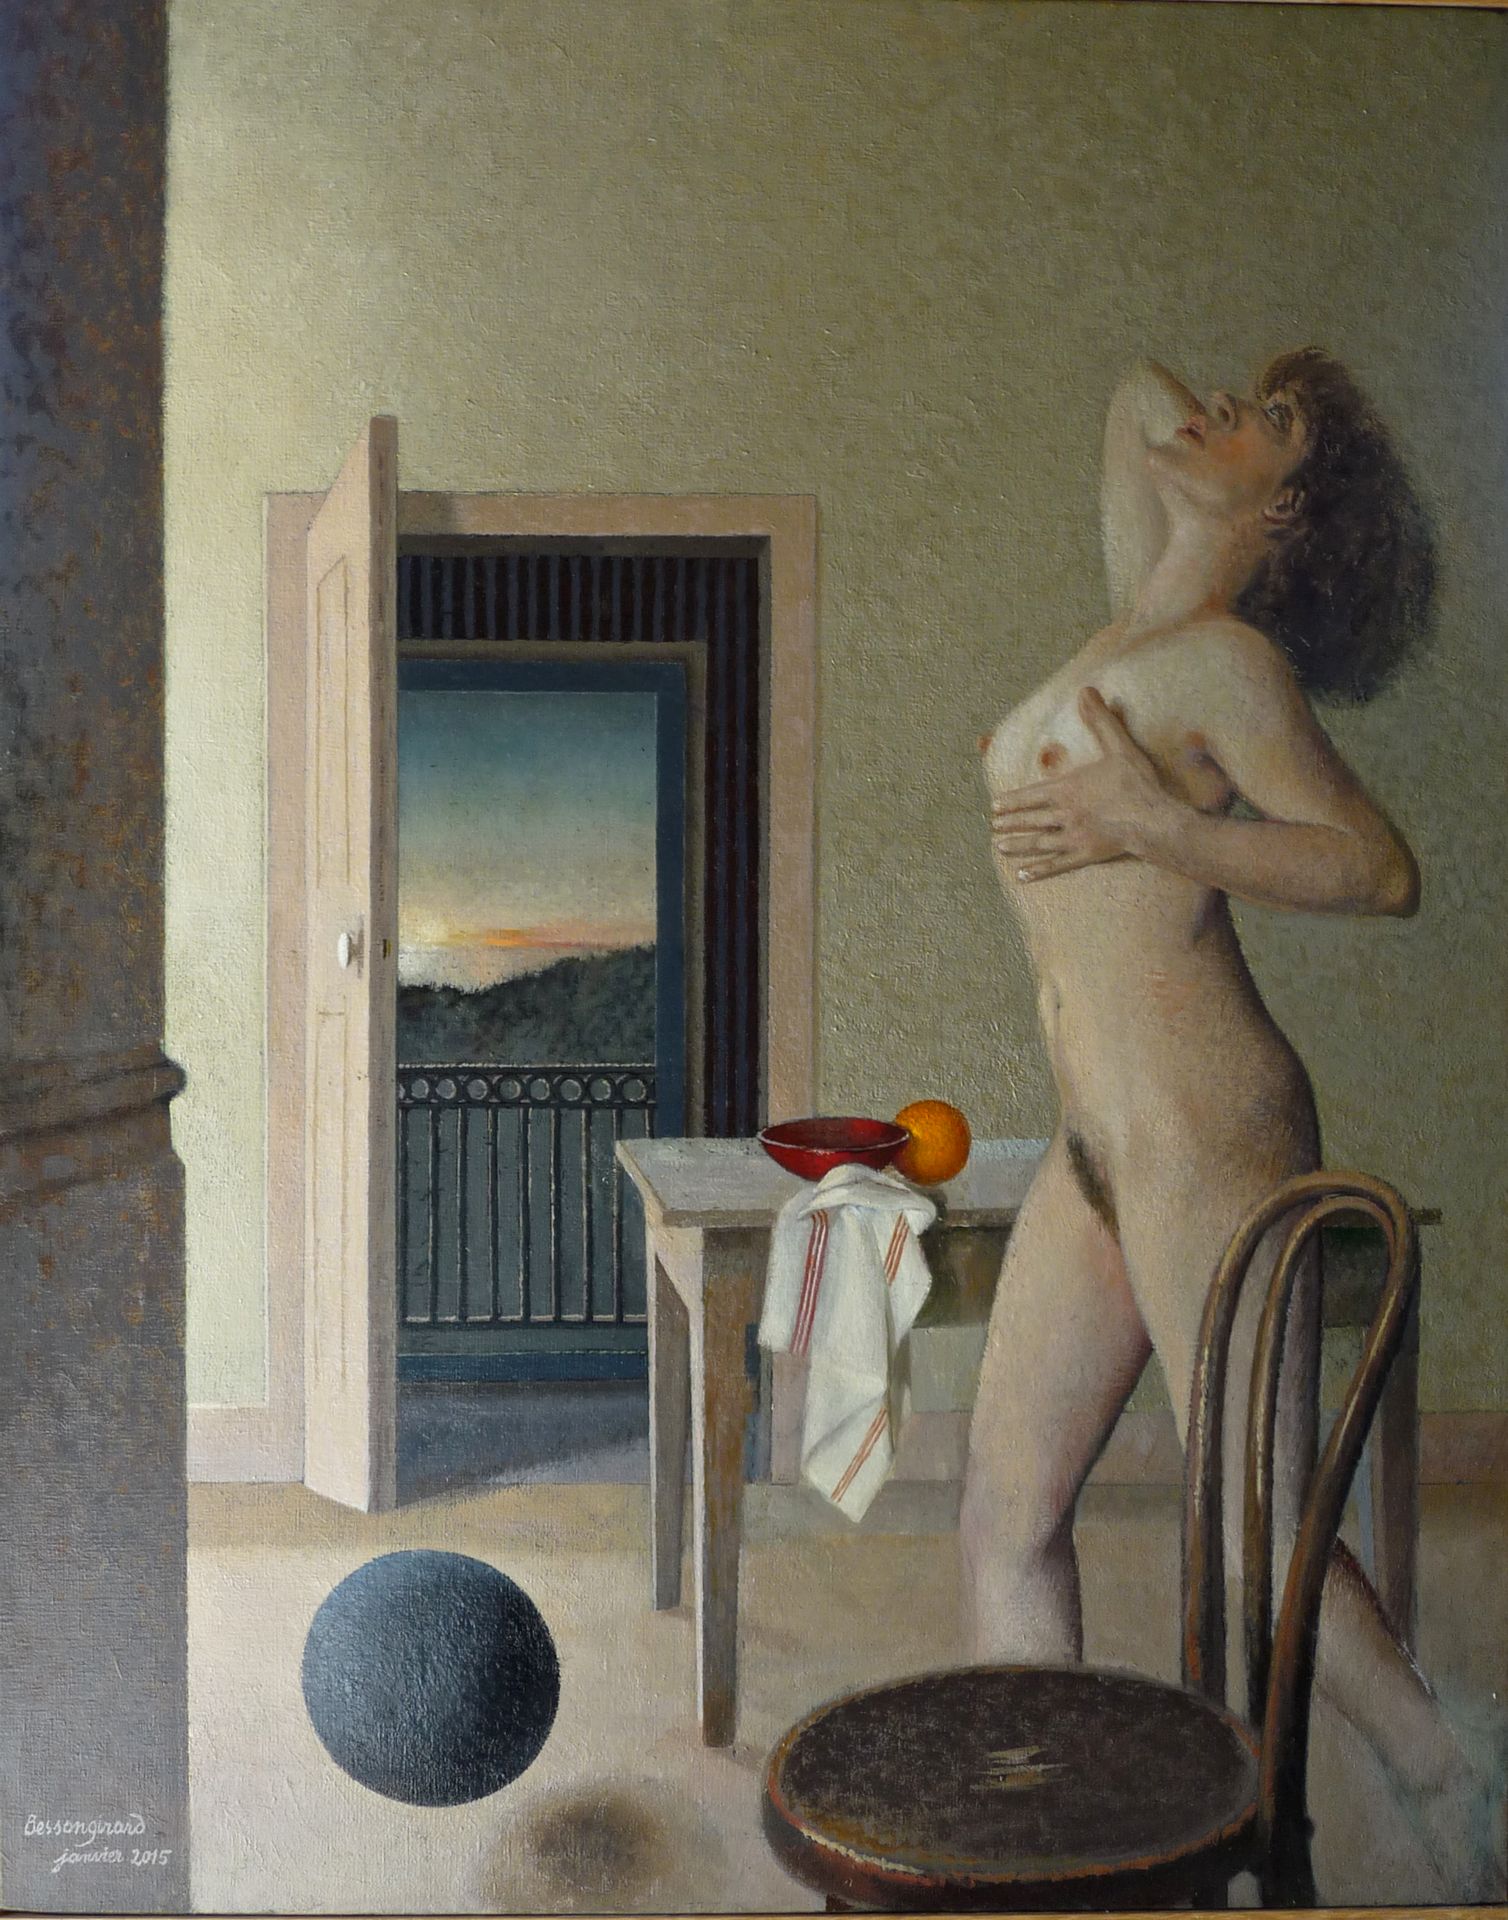 Null 让-克劳德-贝松-吉拉尔(1938-2021)

不确定的黎明, 2015

布面油画，左下角有签名和日期2015年1月

92 x 73 cm